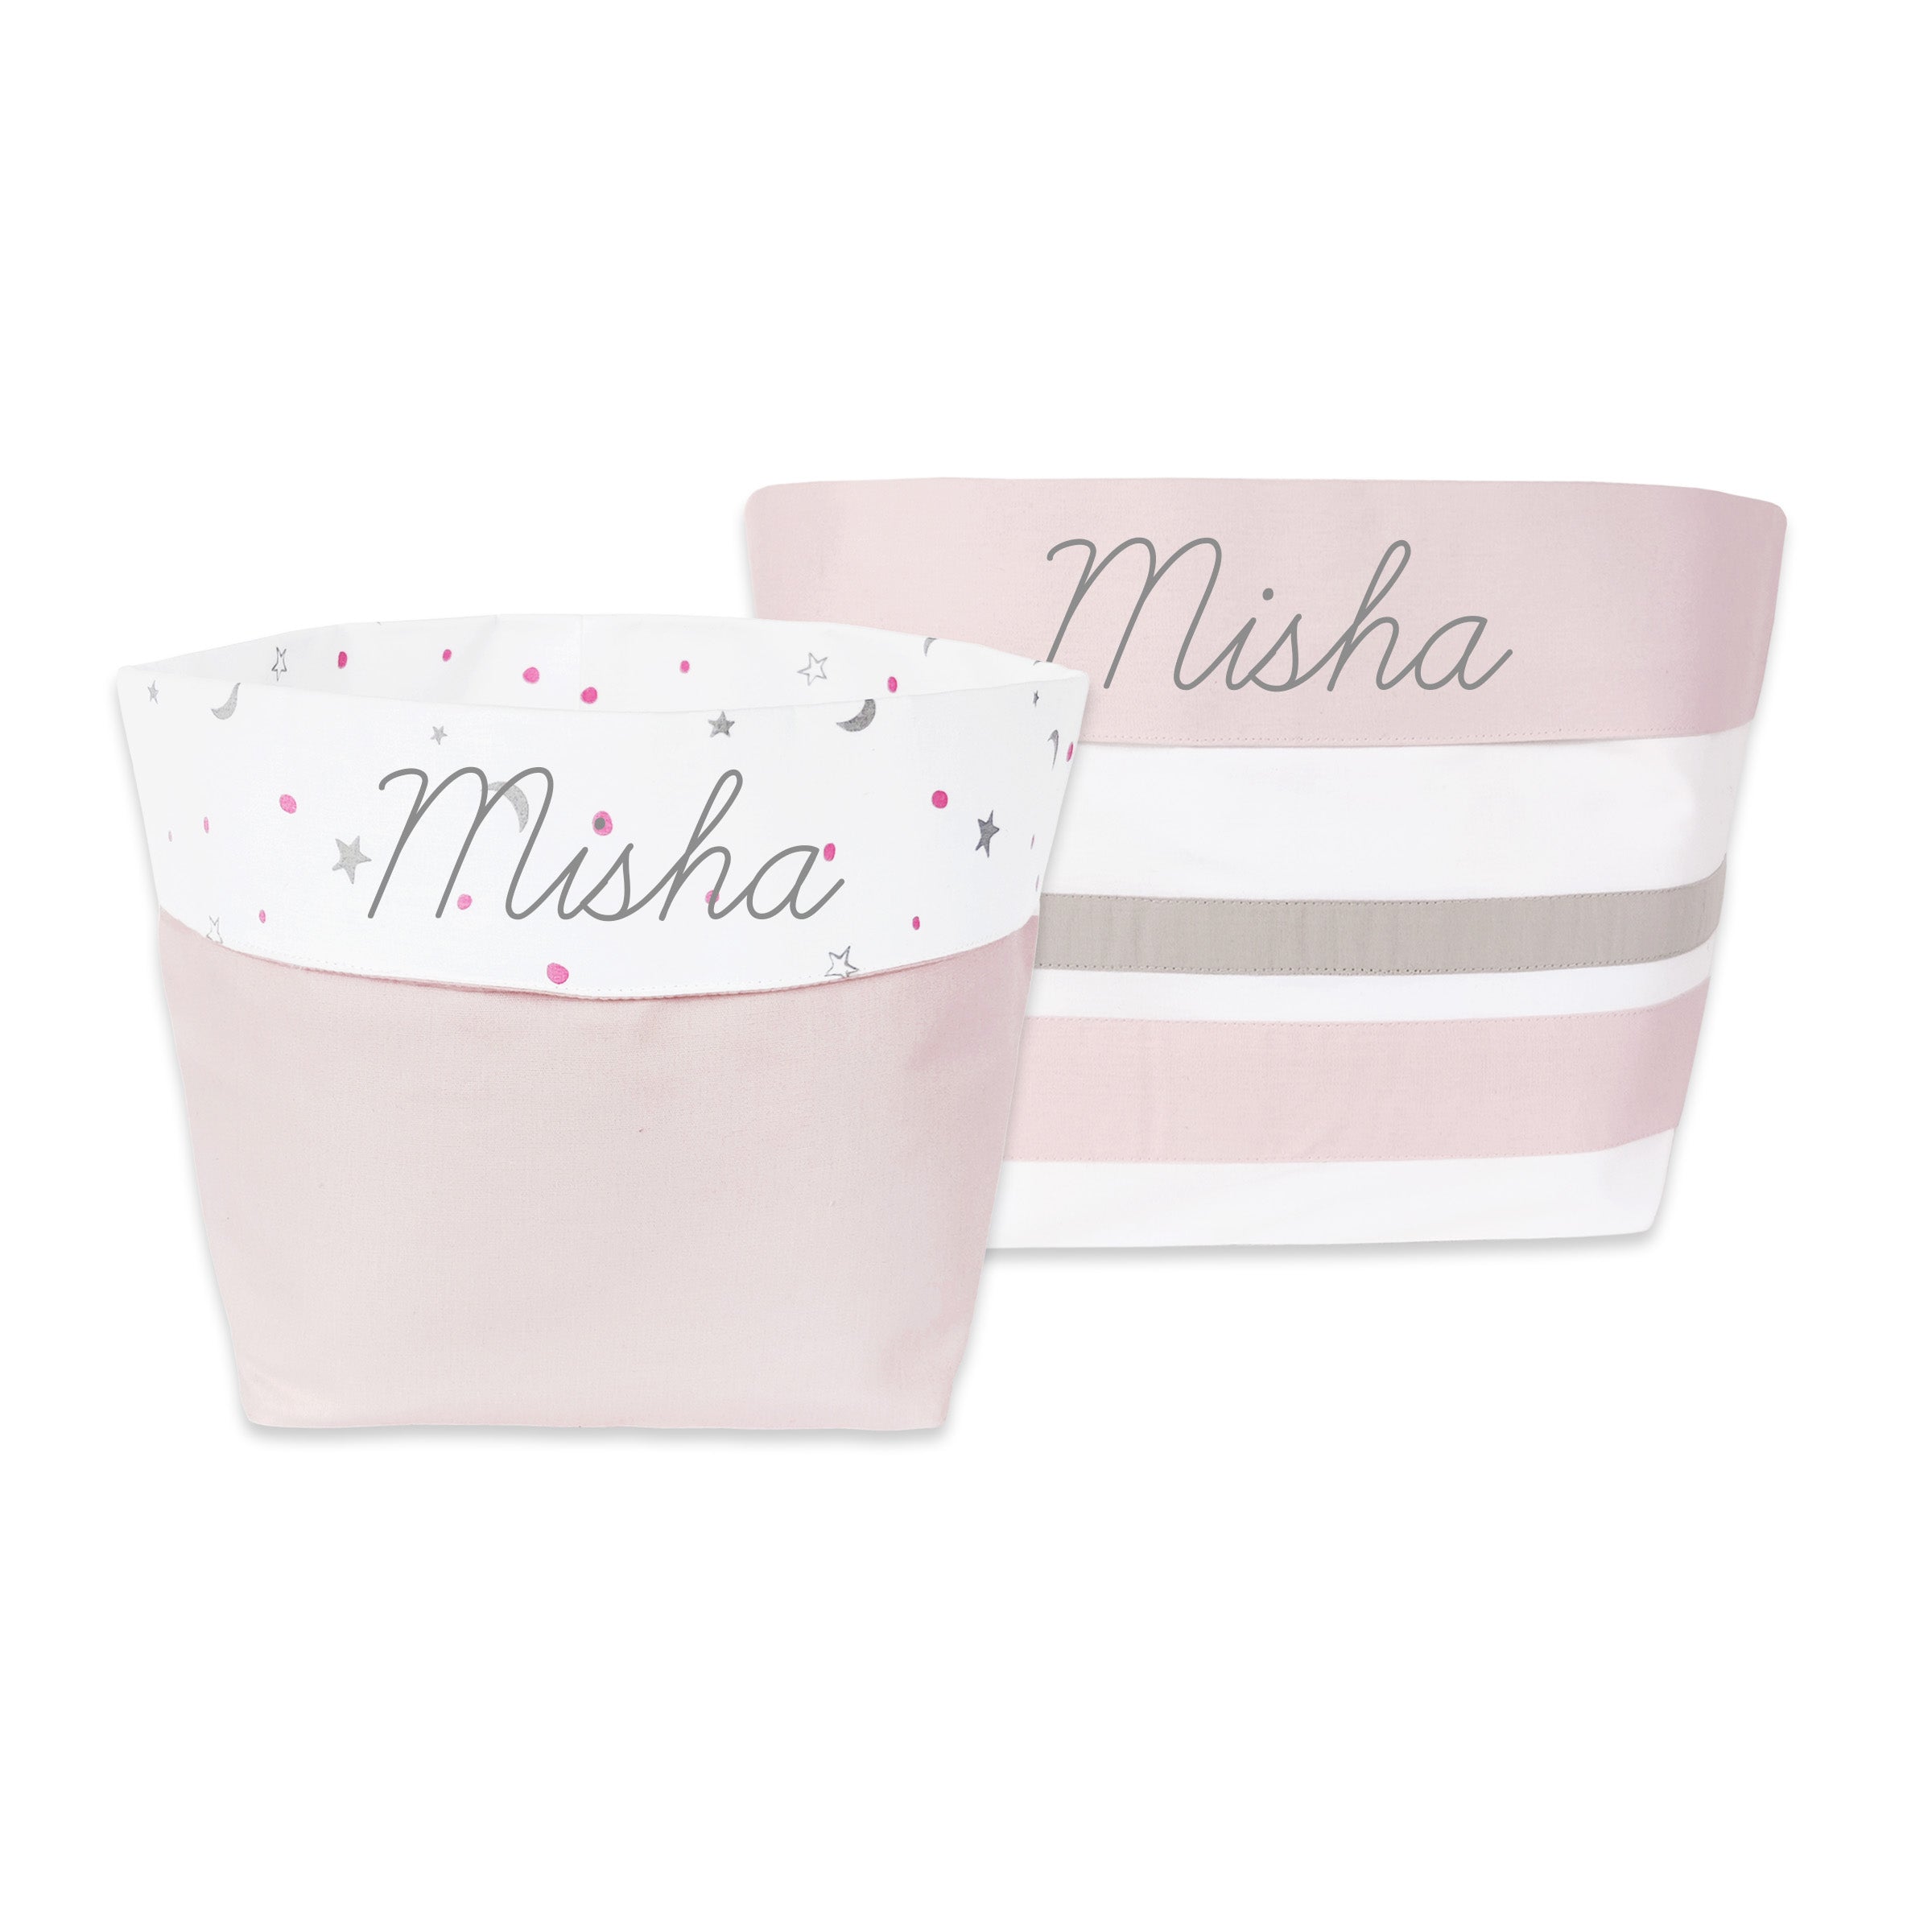 Masilo Fabric Storage Baskets (Set of 2) – Grey